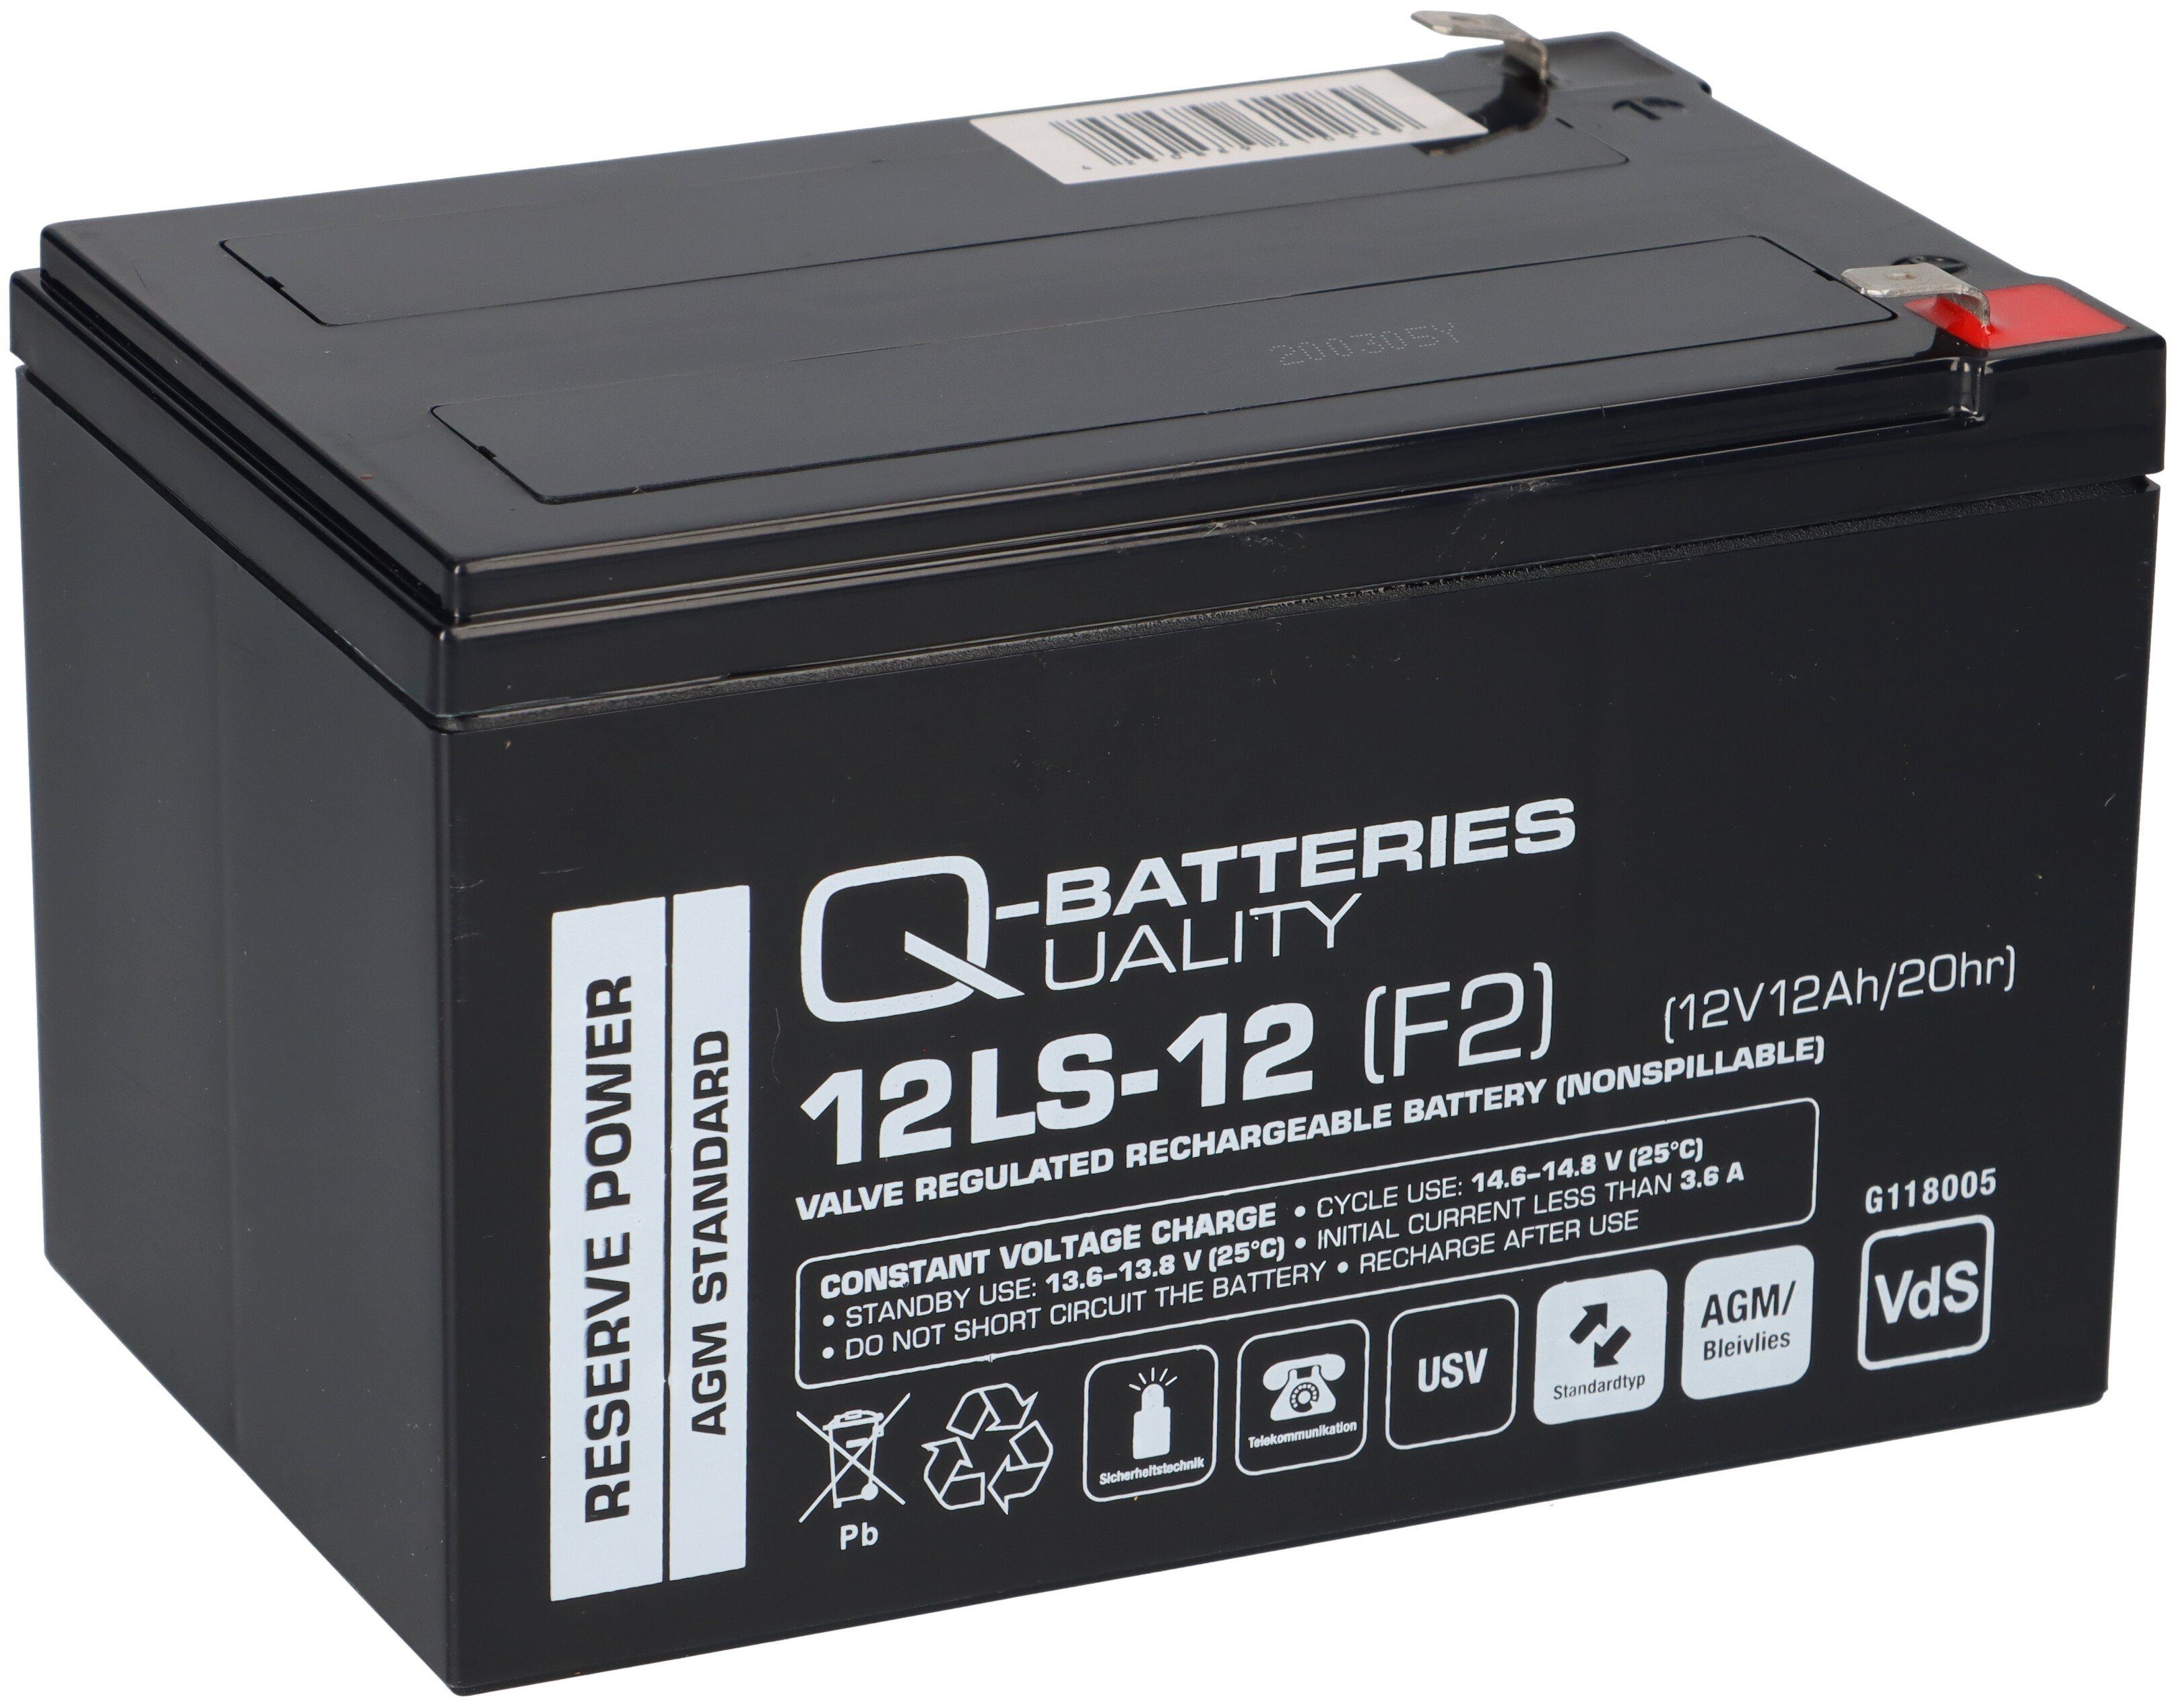 12LS-12 Q-Batteries mit F2 Bleiakkus / VdS Blei-Vlies-Akku VRLA Q-Batteries 12V 12Ah AGM